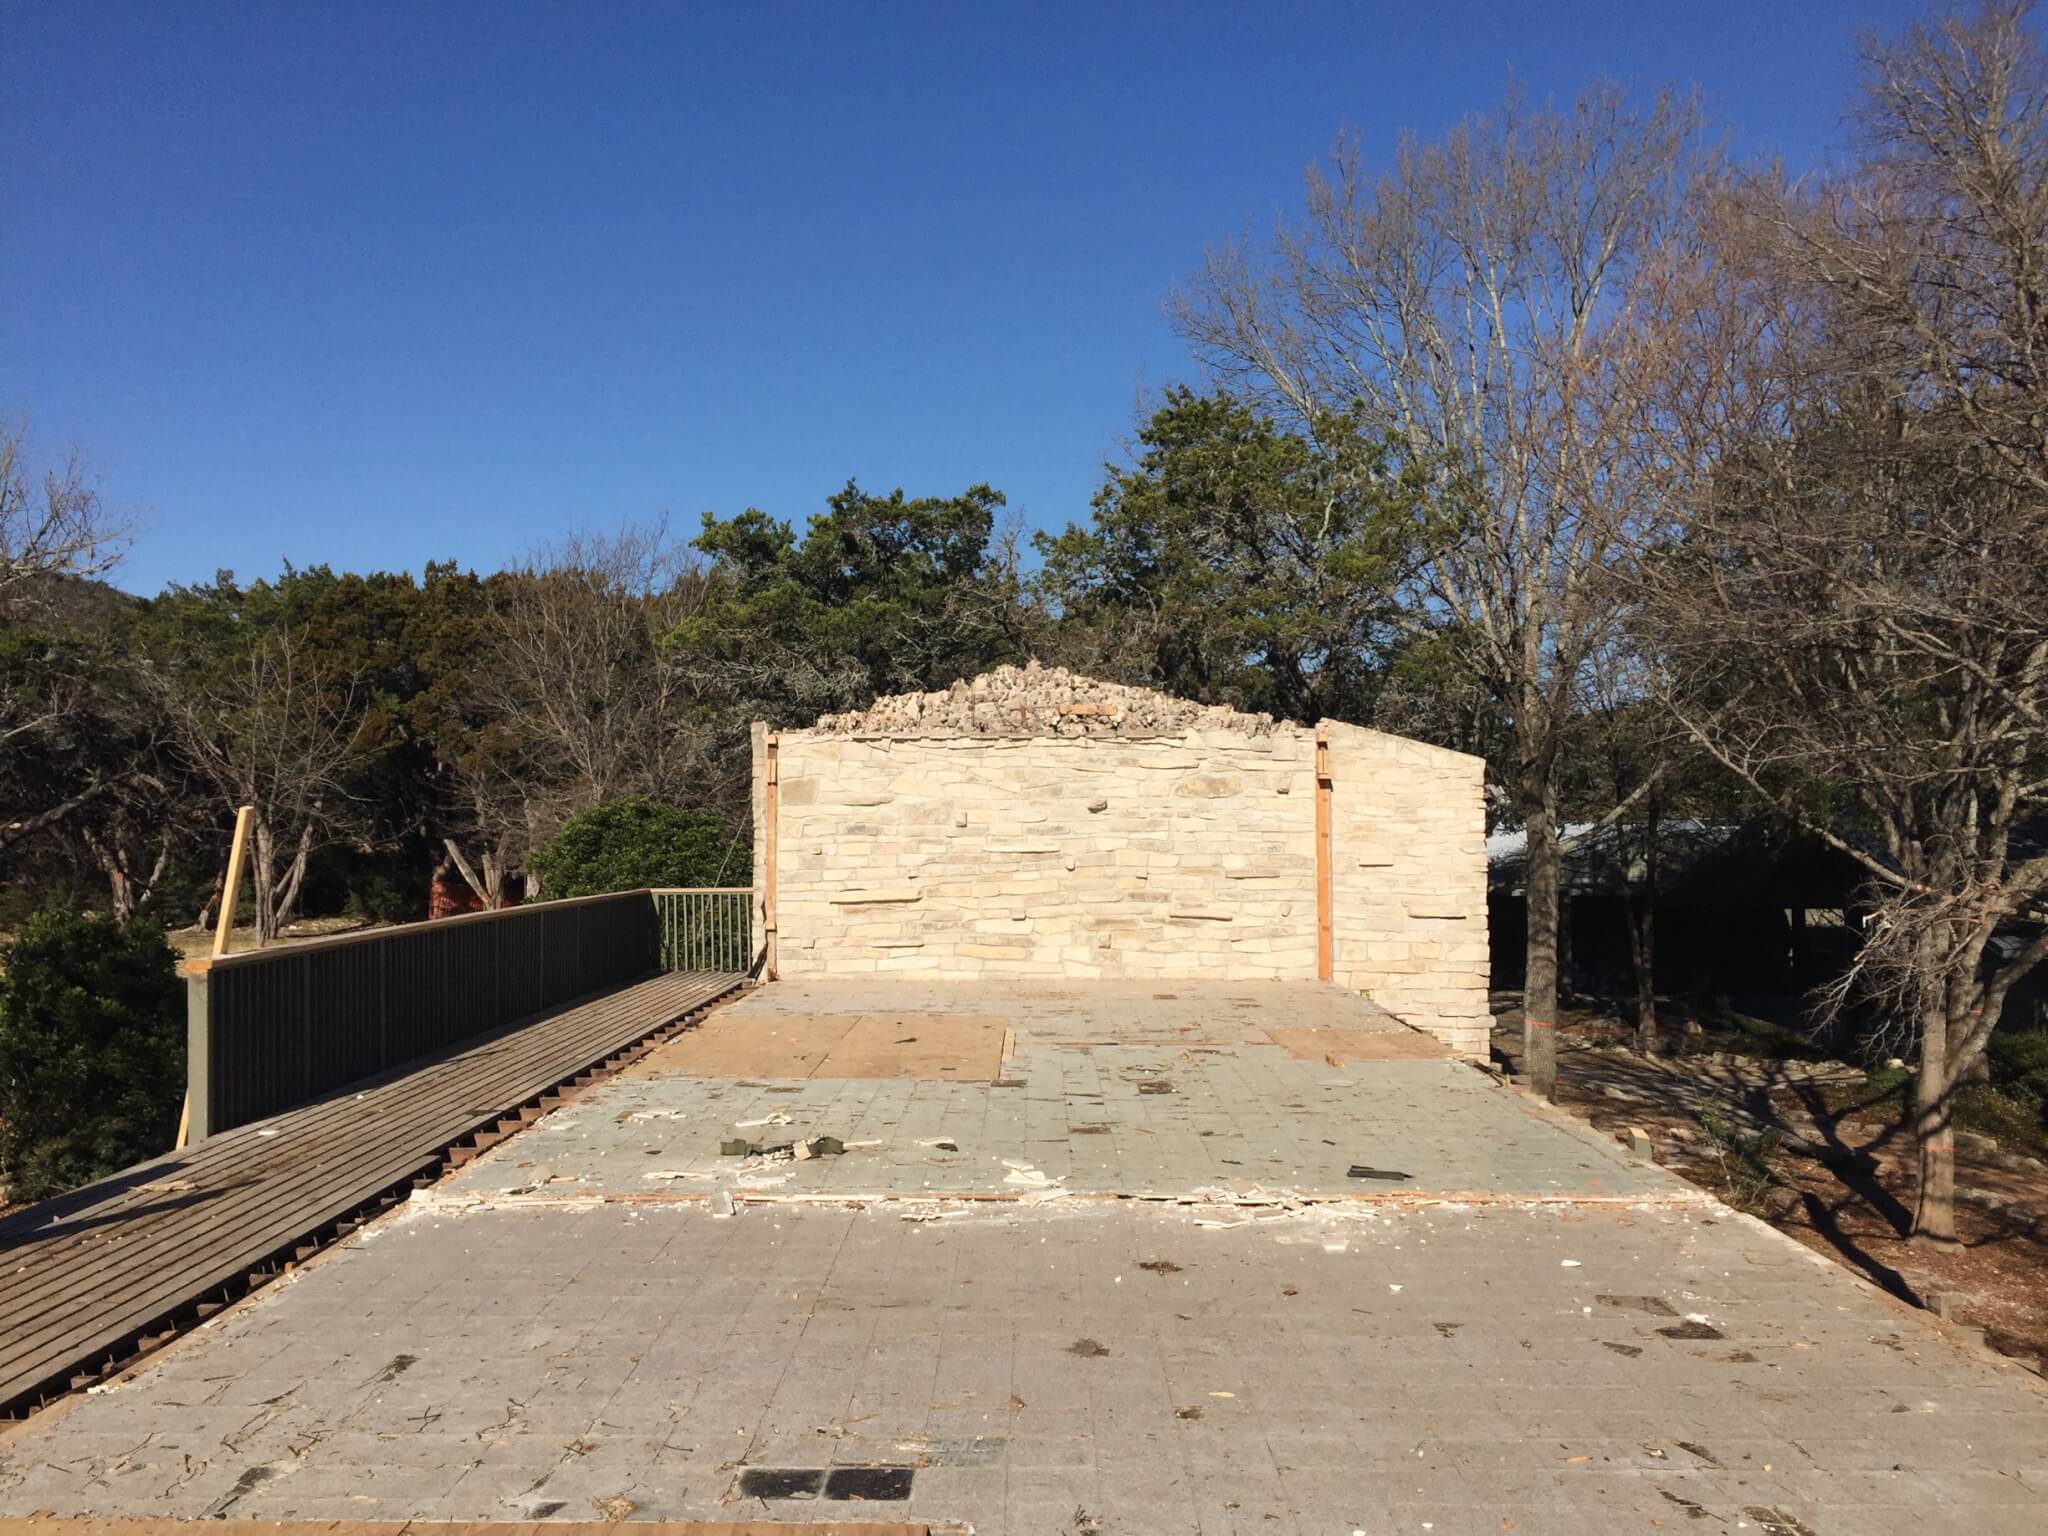 Demolition Progress: February 1, 2016